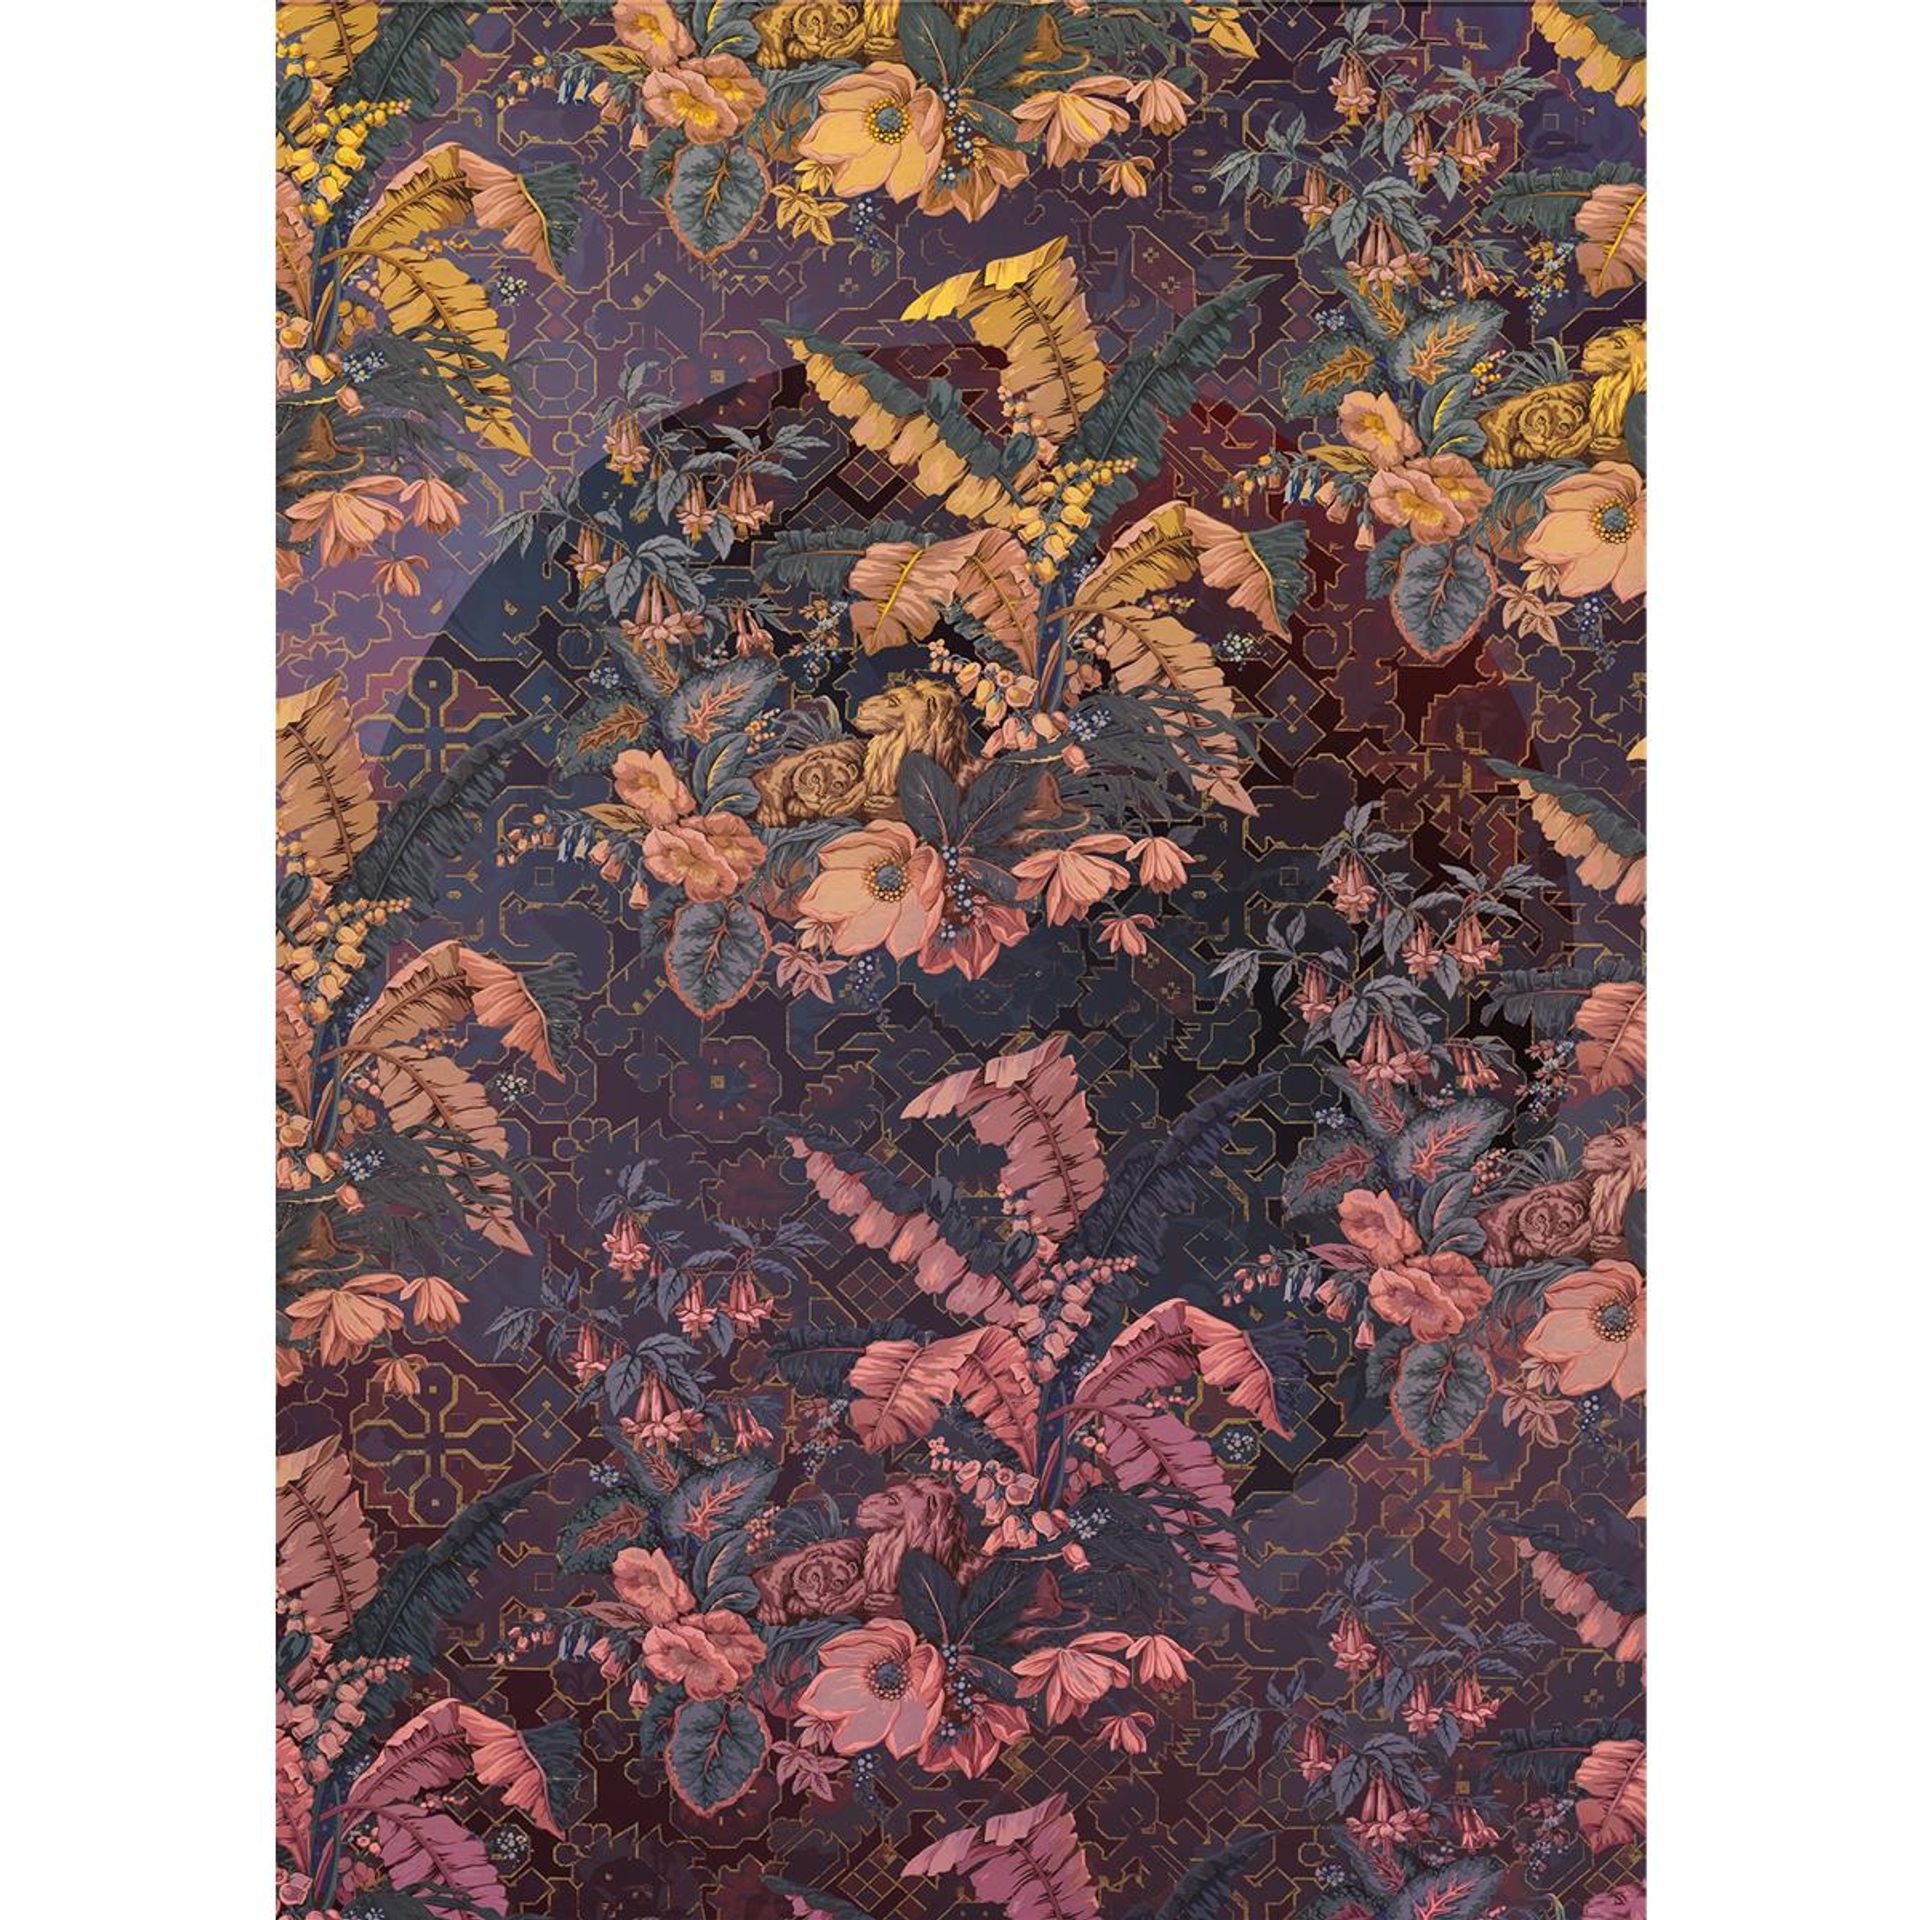 Vlies Fototapete - Orient Violet - Größe 200 x 270 cm